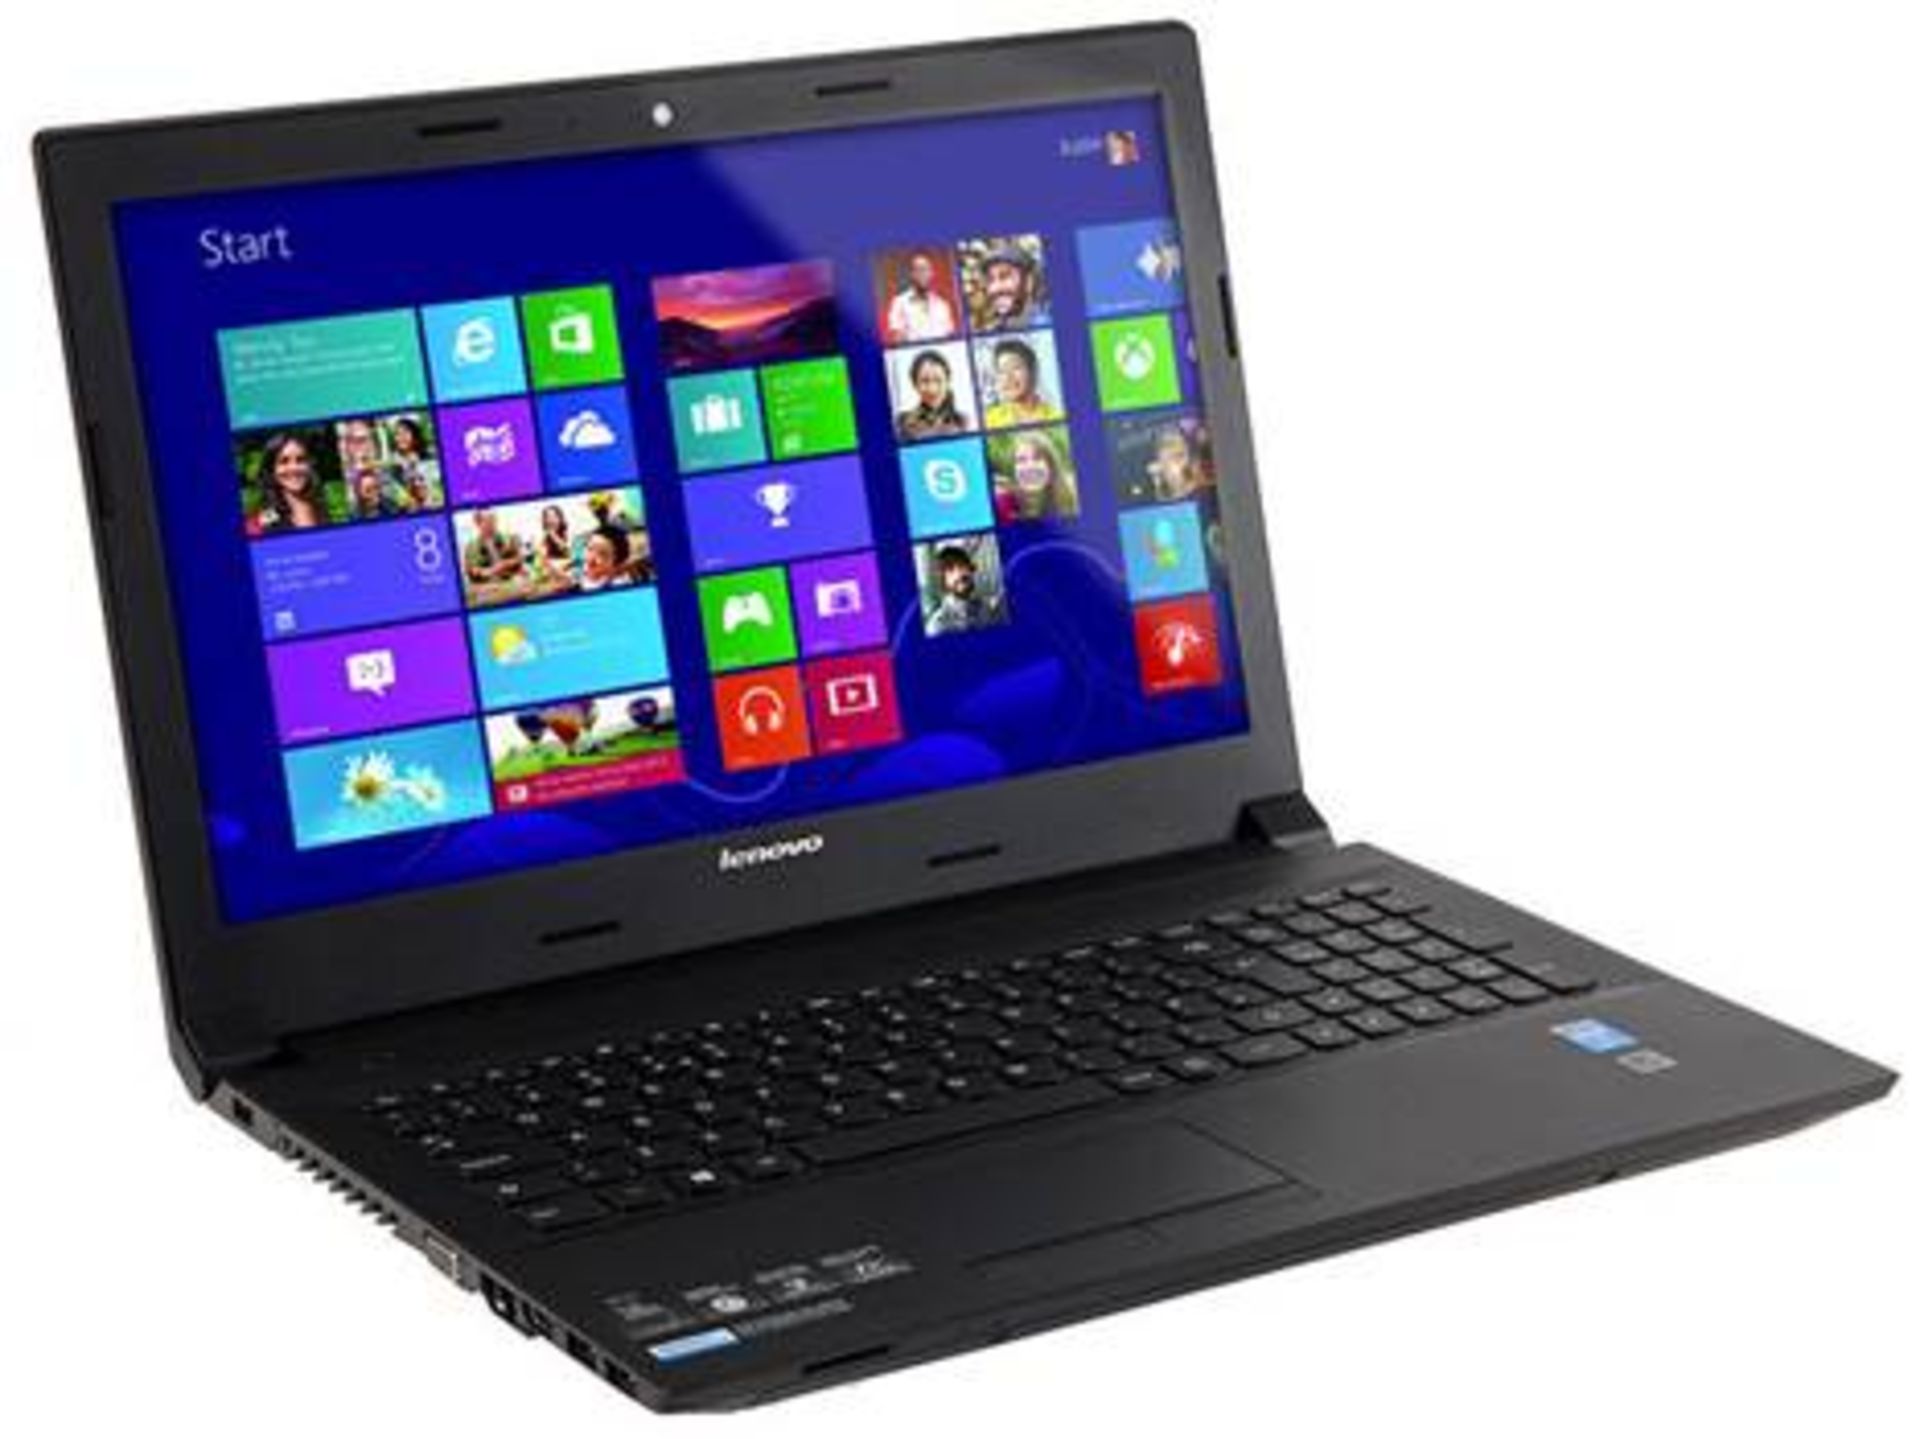 V Lenovo (IBM) G50-30 15.6" Laptop Intel Celeron N2840 2.16ghz 4GB RAM 500GB HDD Windows 8.1 Brand - Image 2 of 2